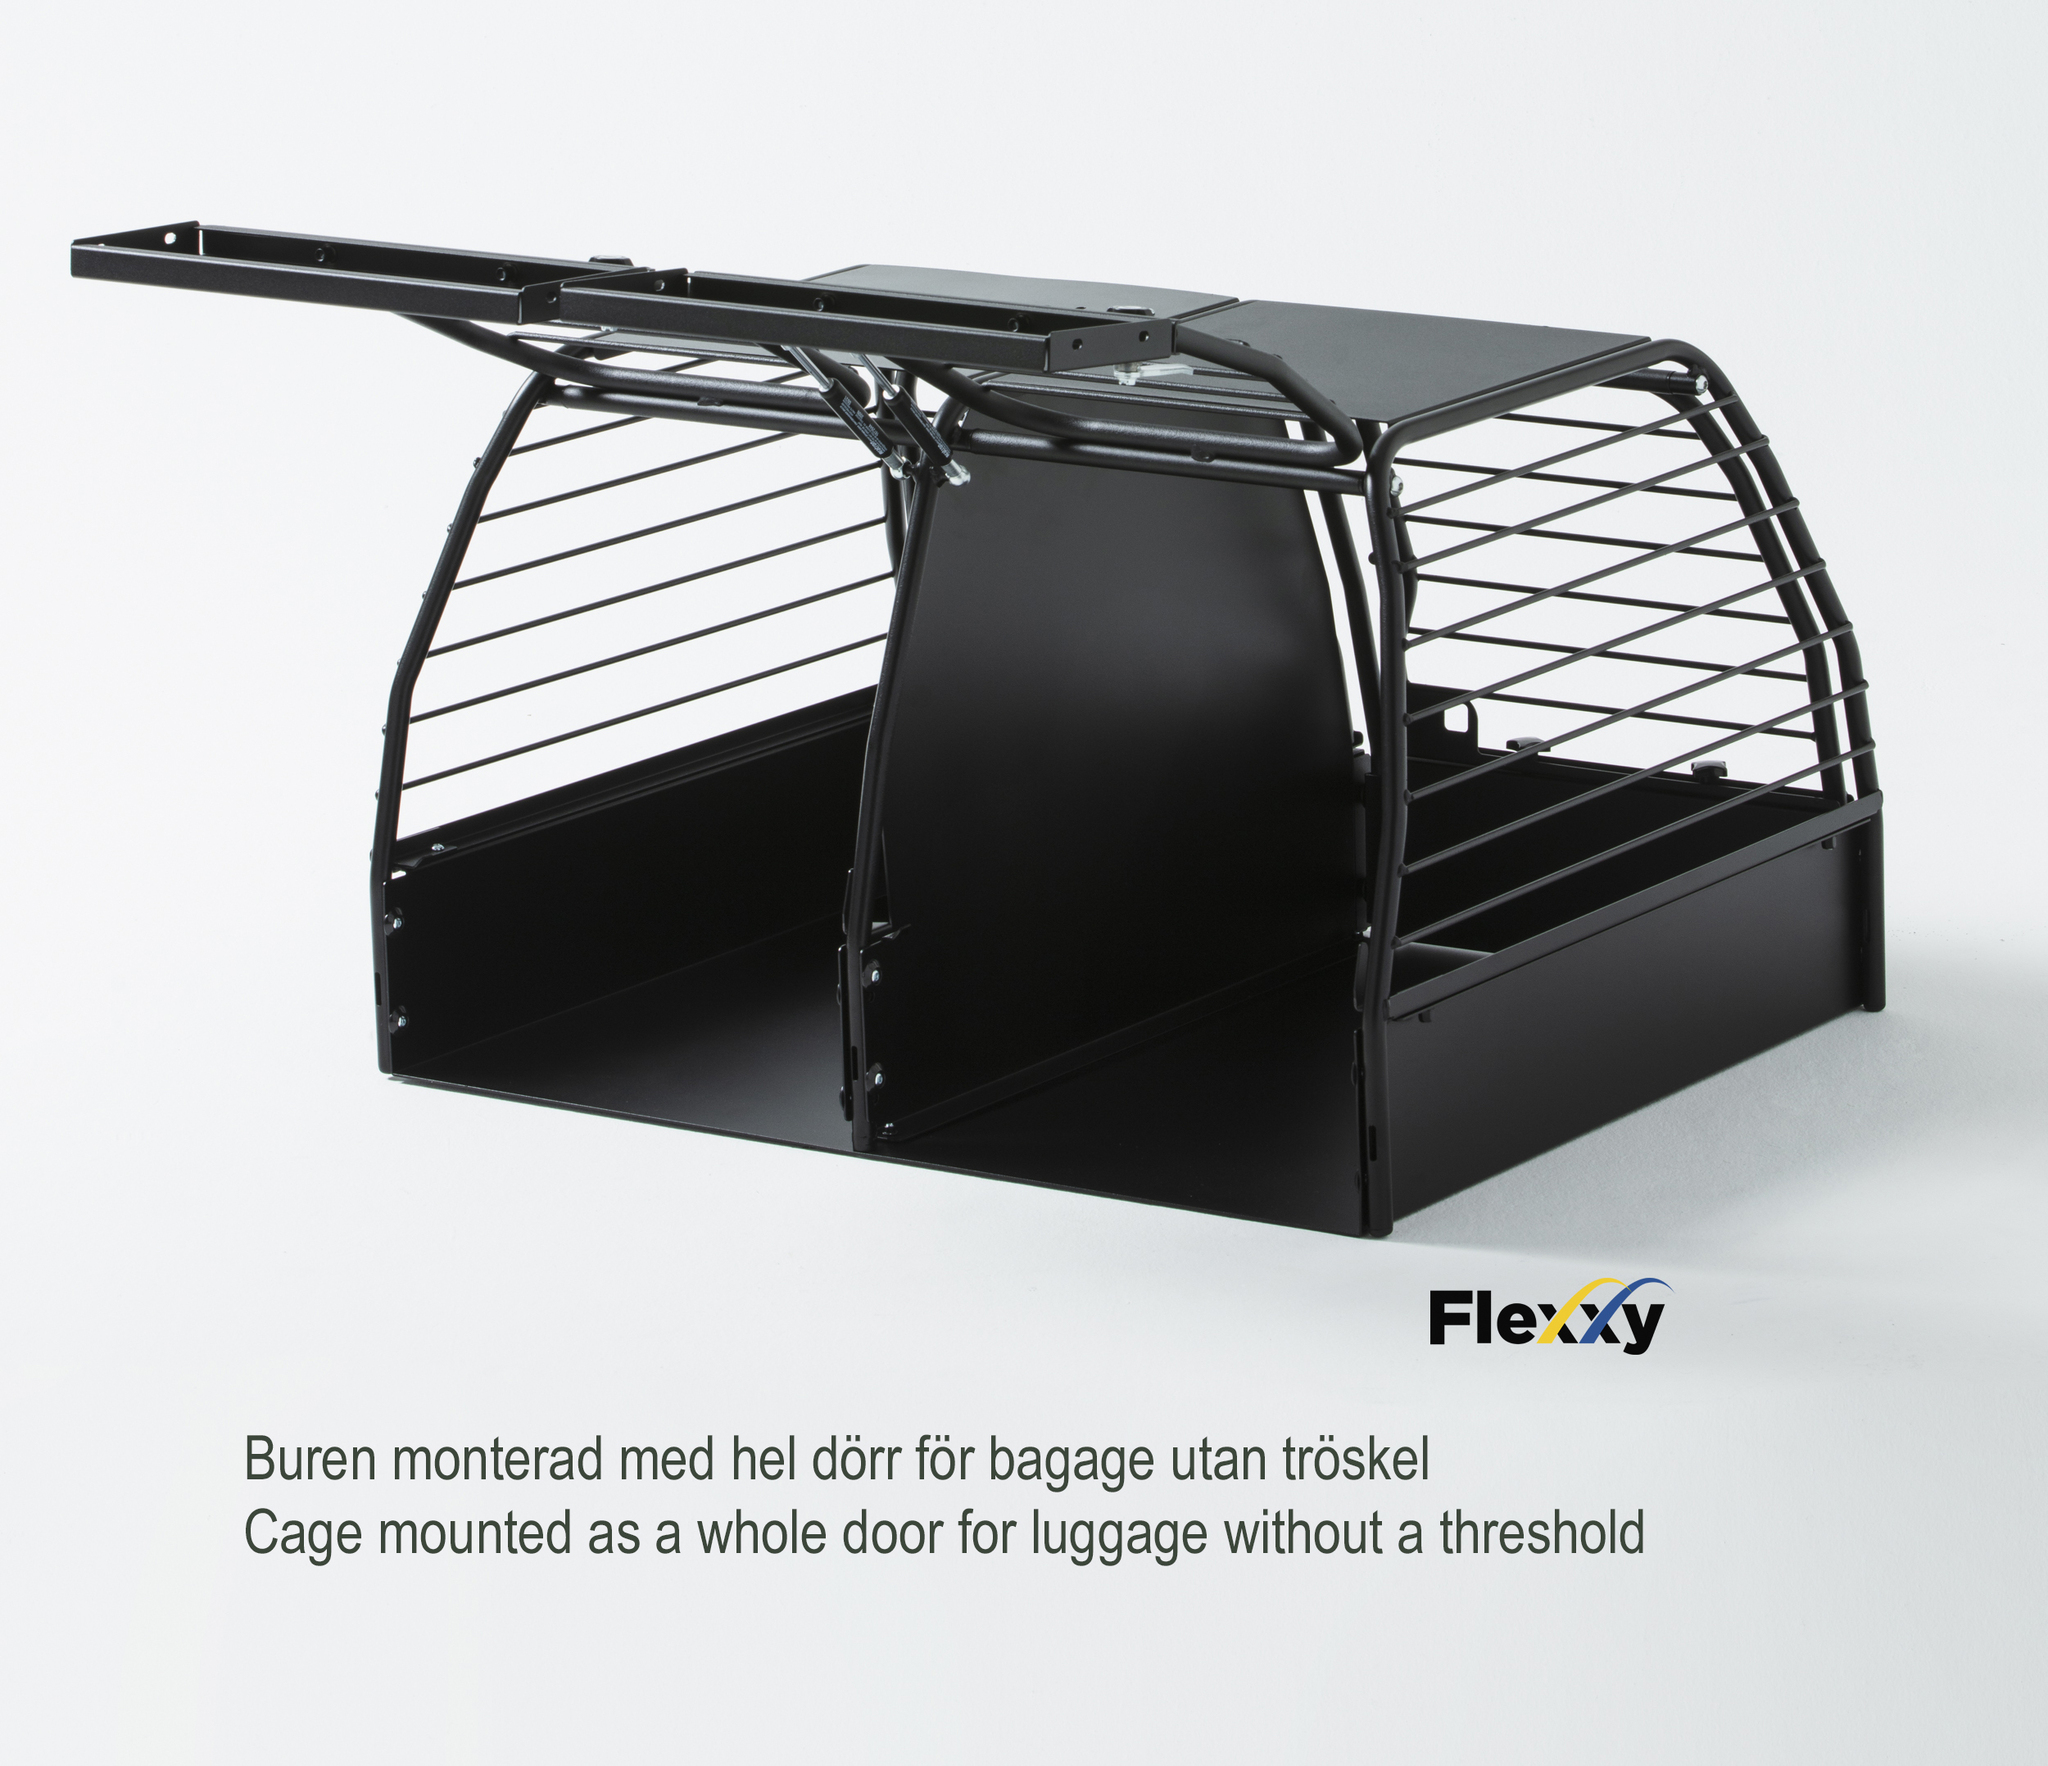 Flexxy dog cage double Small